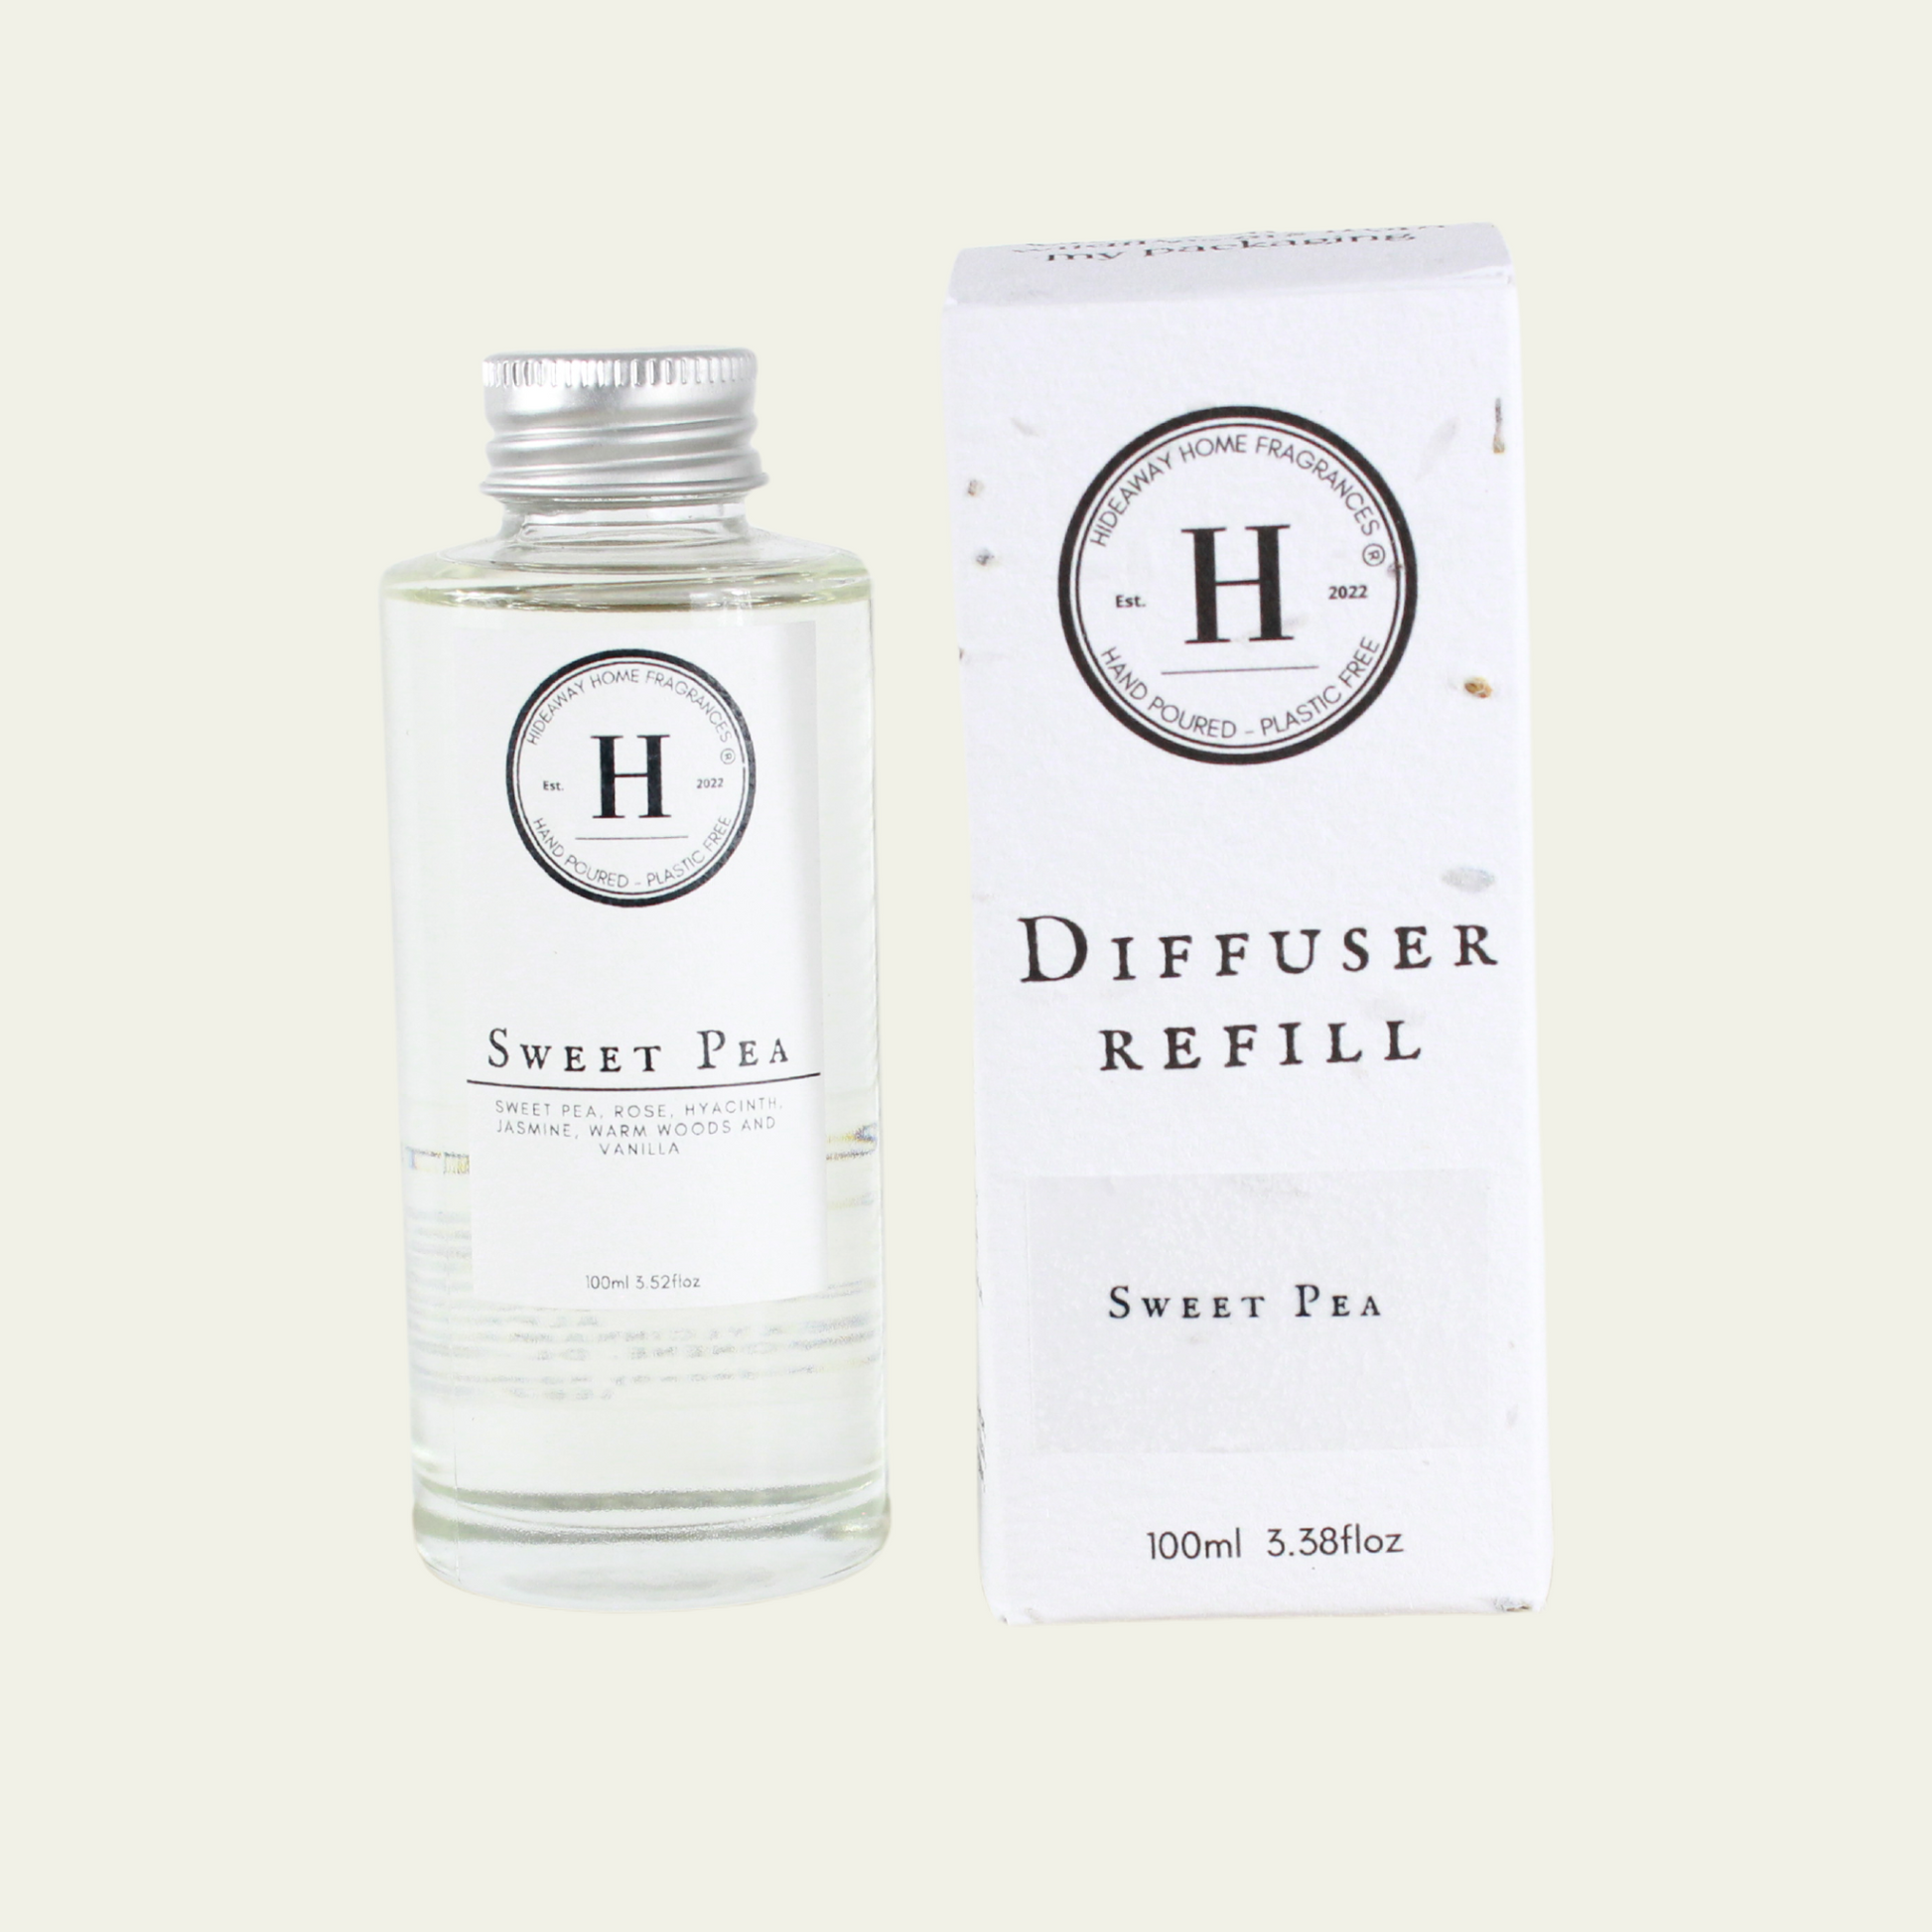 Sweet Pea Diffuser Refill - Hideaway Home Fragrances